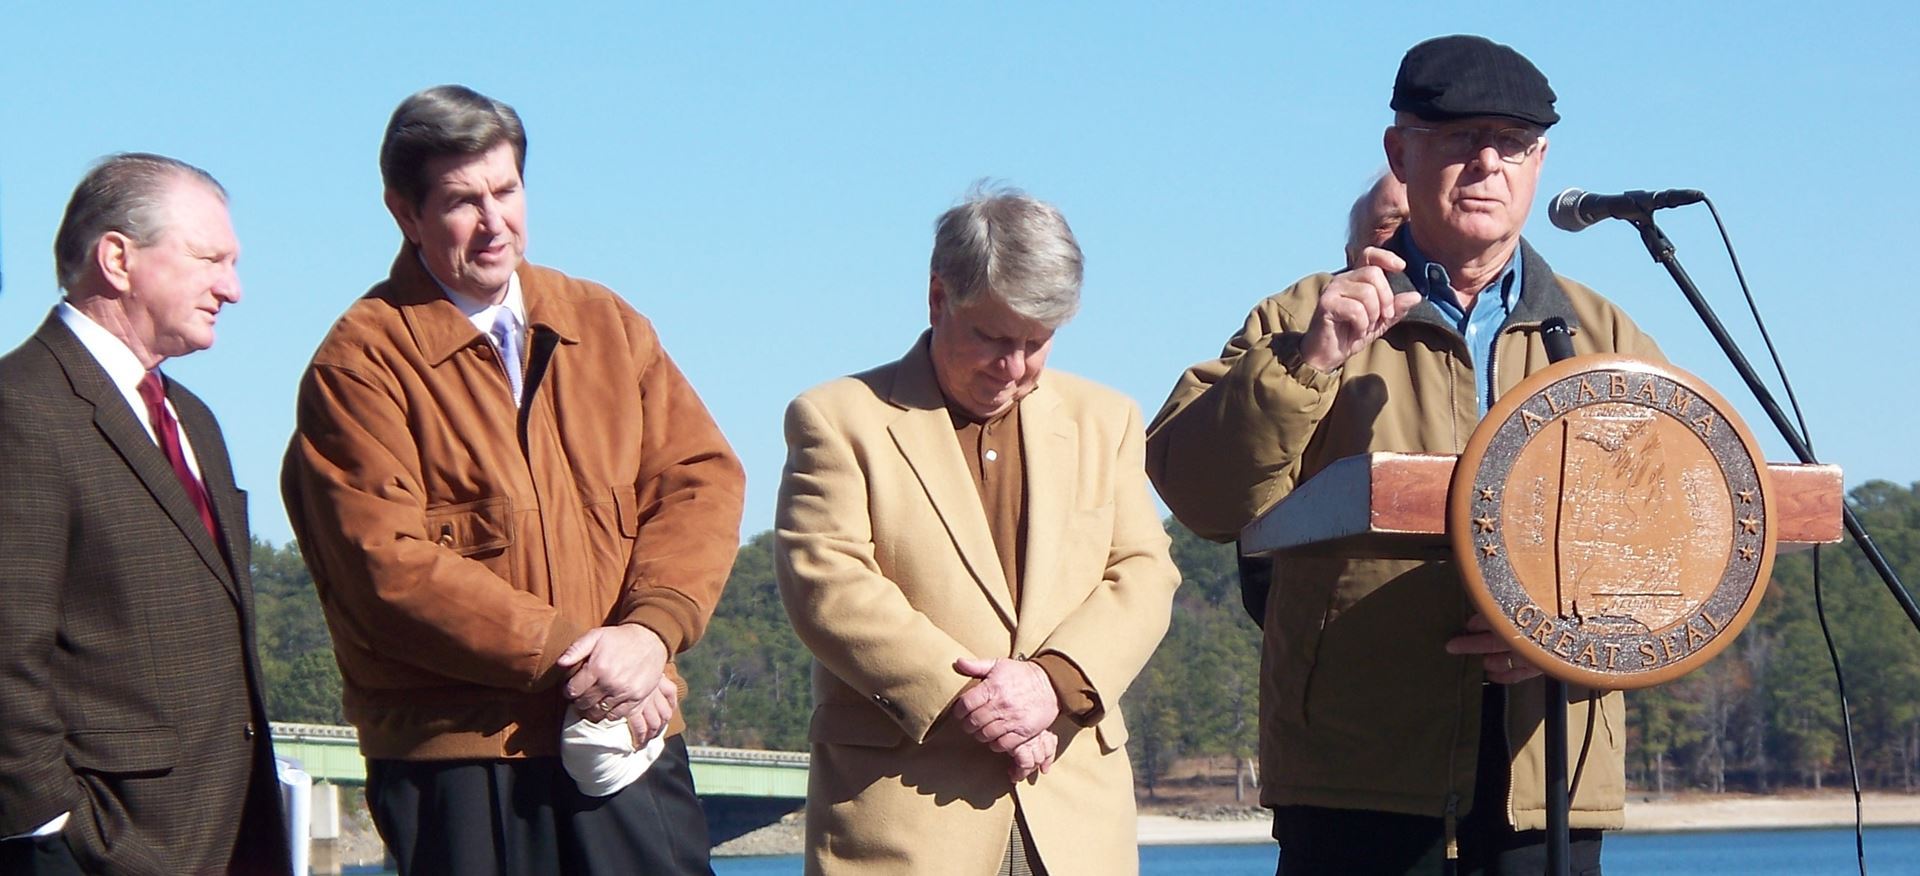 Dick Bronson at Kowaliga for the creation of Treasured Alabama Lake through executive order by Governor Riley.